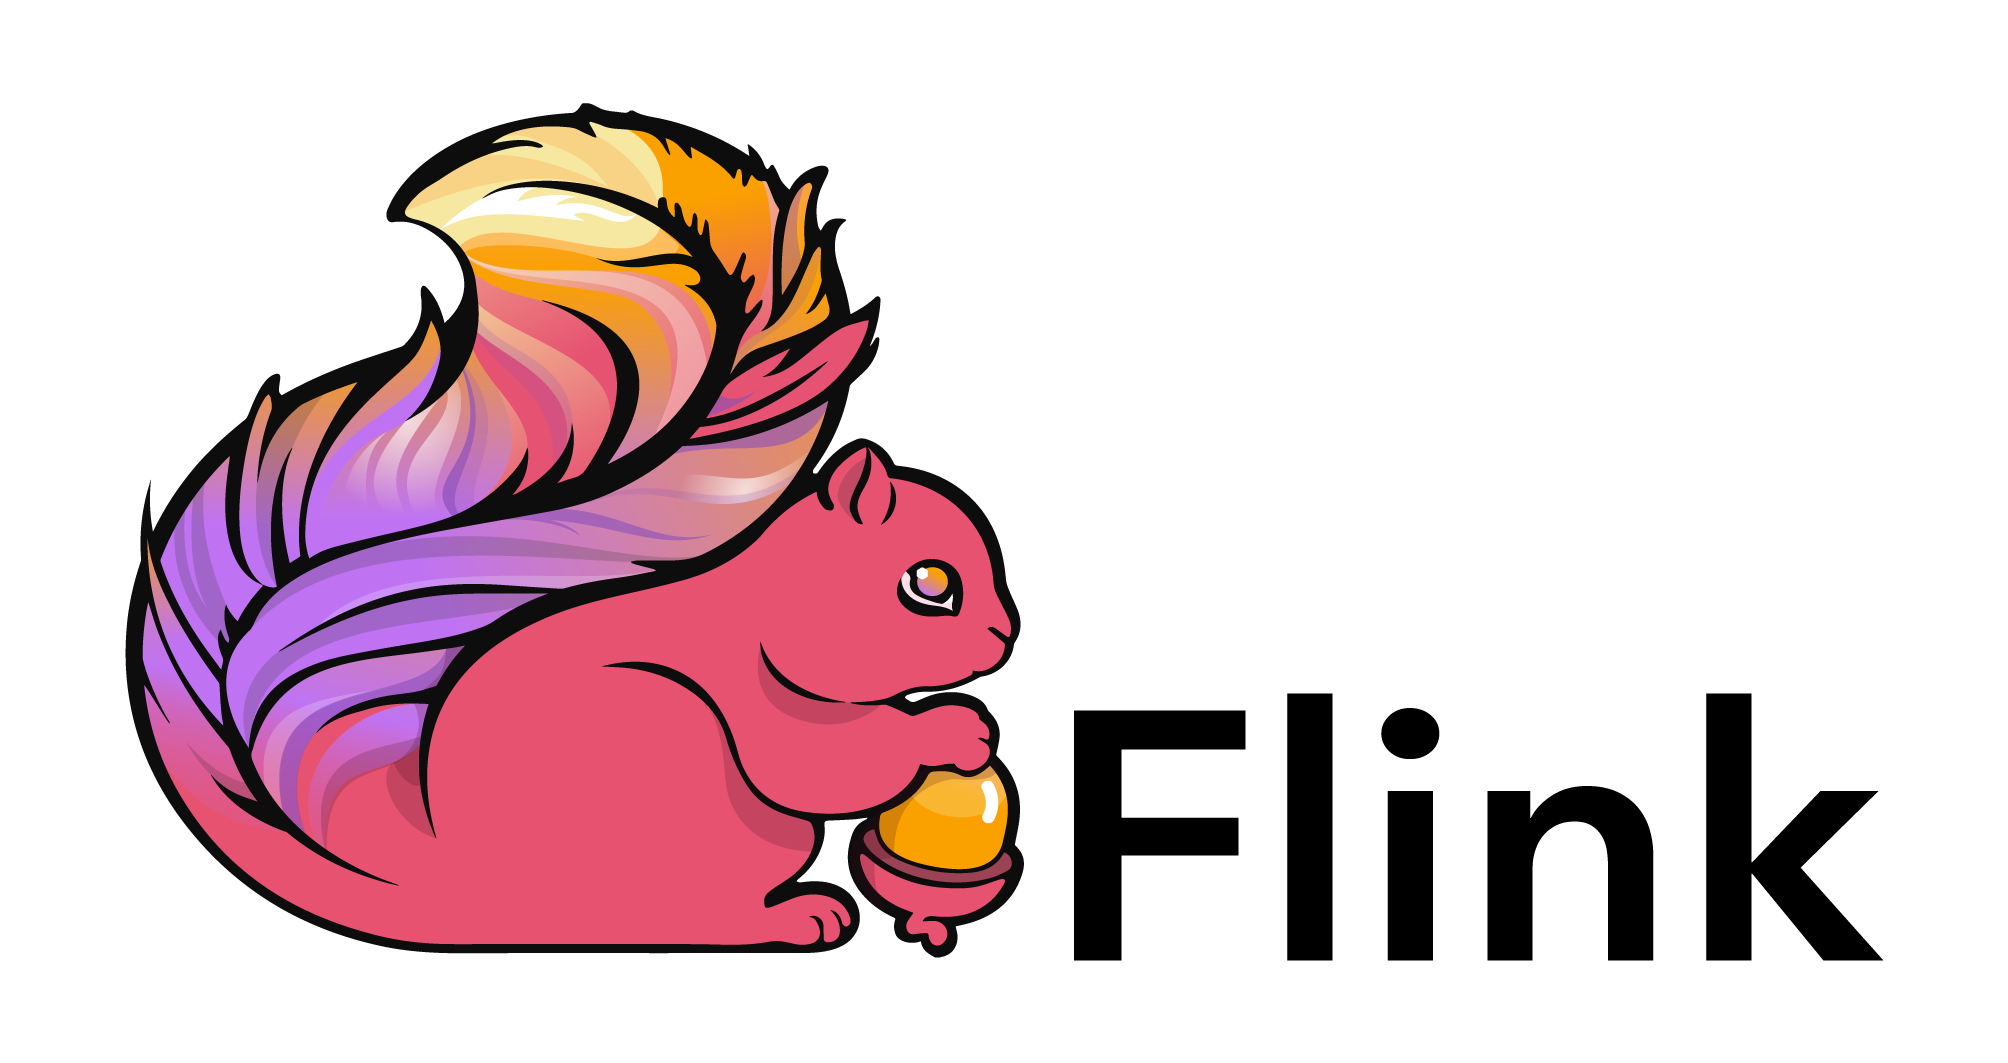 Flink的logo是一只可爱的红色松鼠